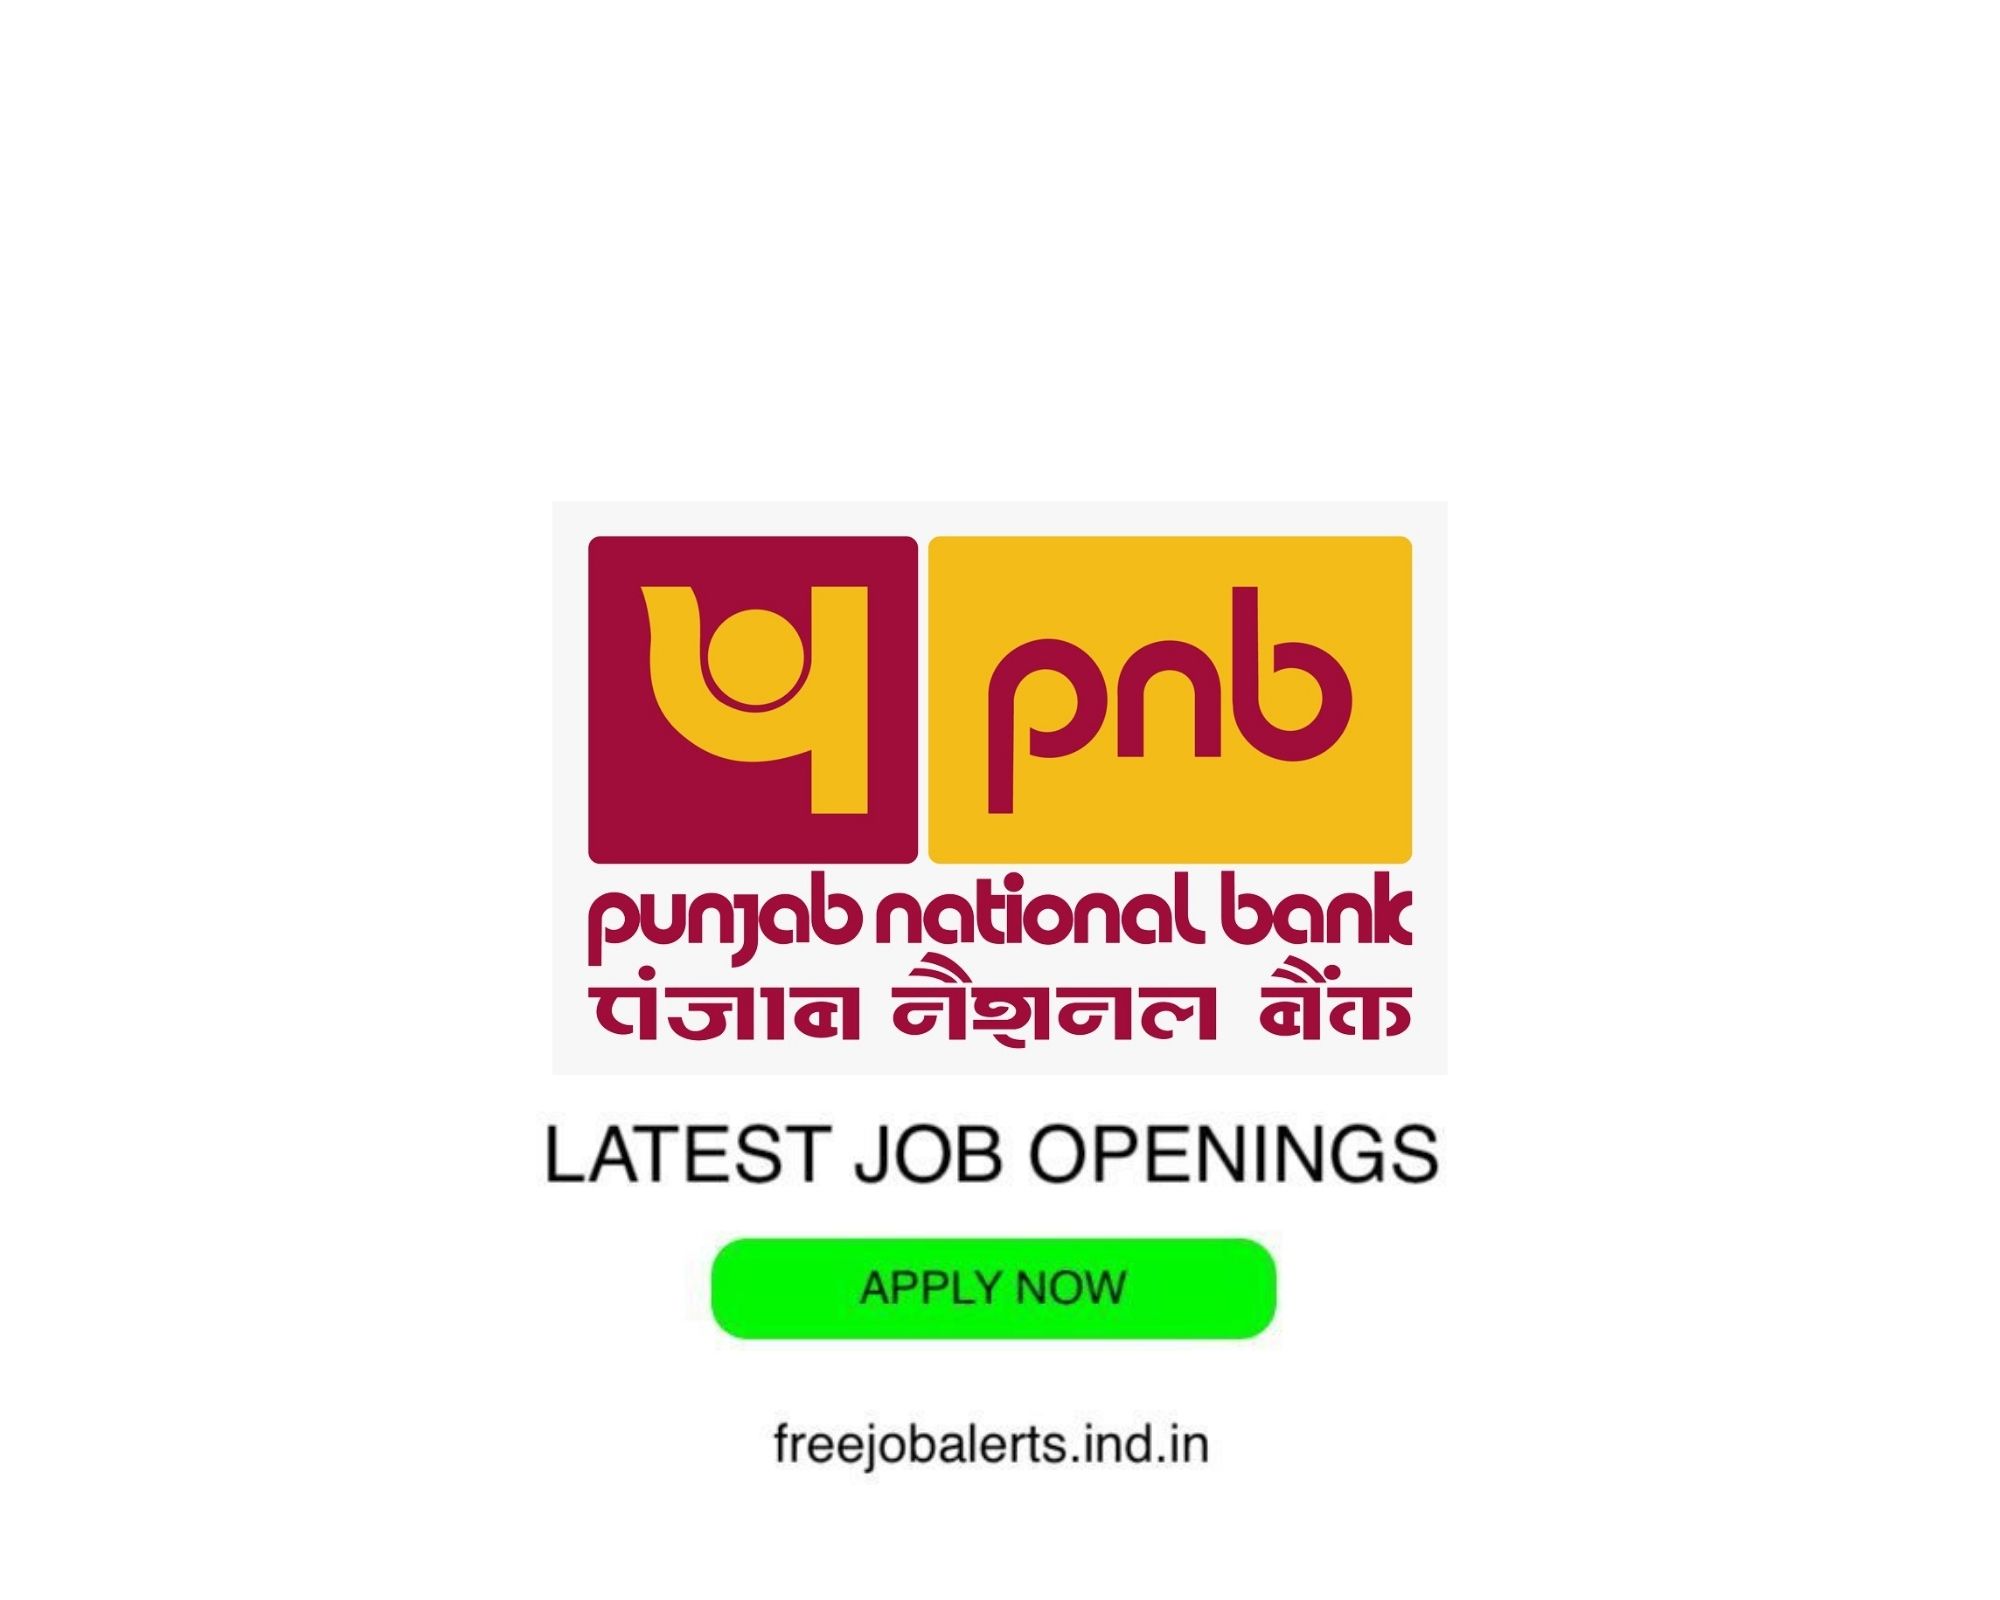 PNB - Punjab National Bank - Latest Govt job openings - Free job alerts, Indian Govt Jobs